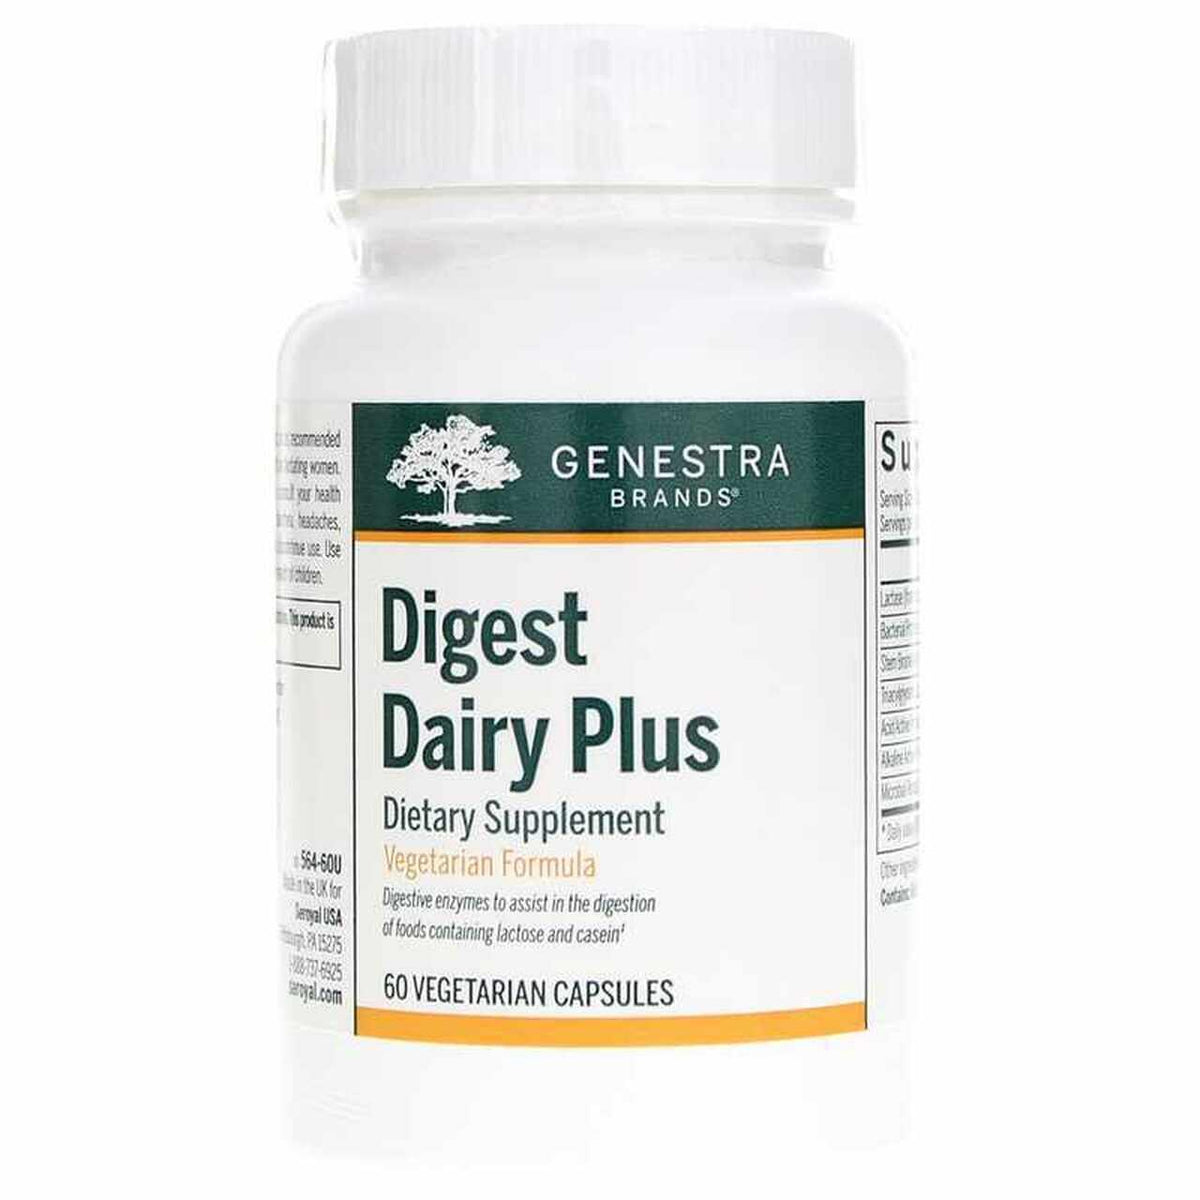 Genestra Digest Dairy Plus 60 Veggie Caps Supplements - Digestive Enzymes at Village Vitamin Store